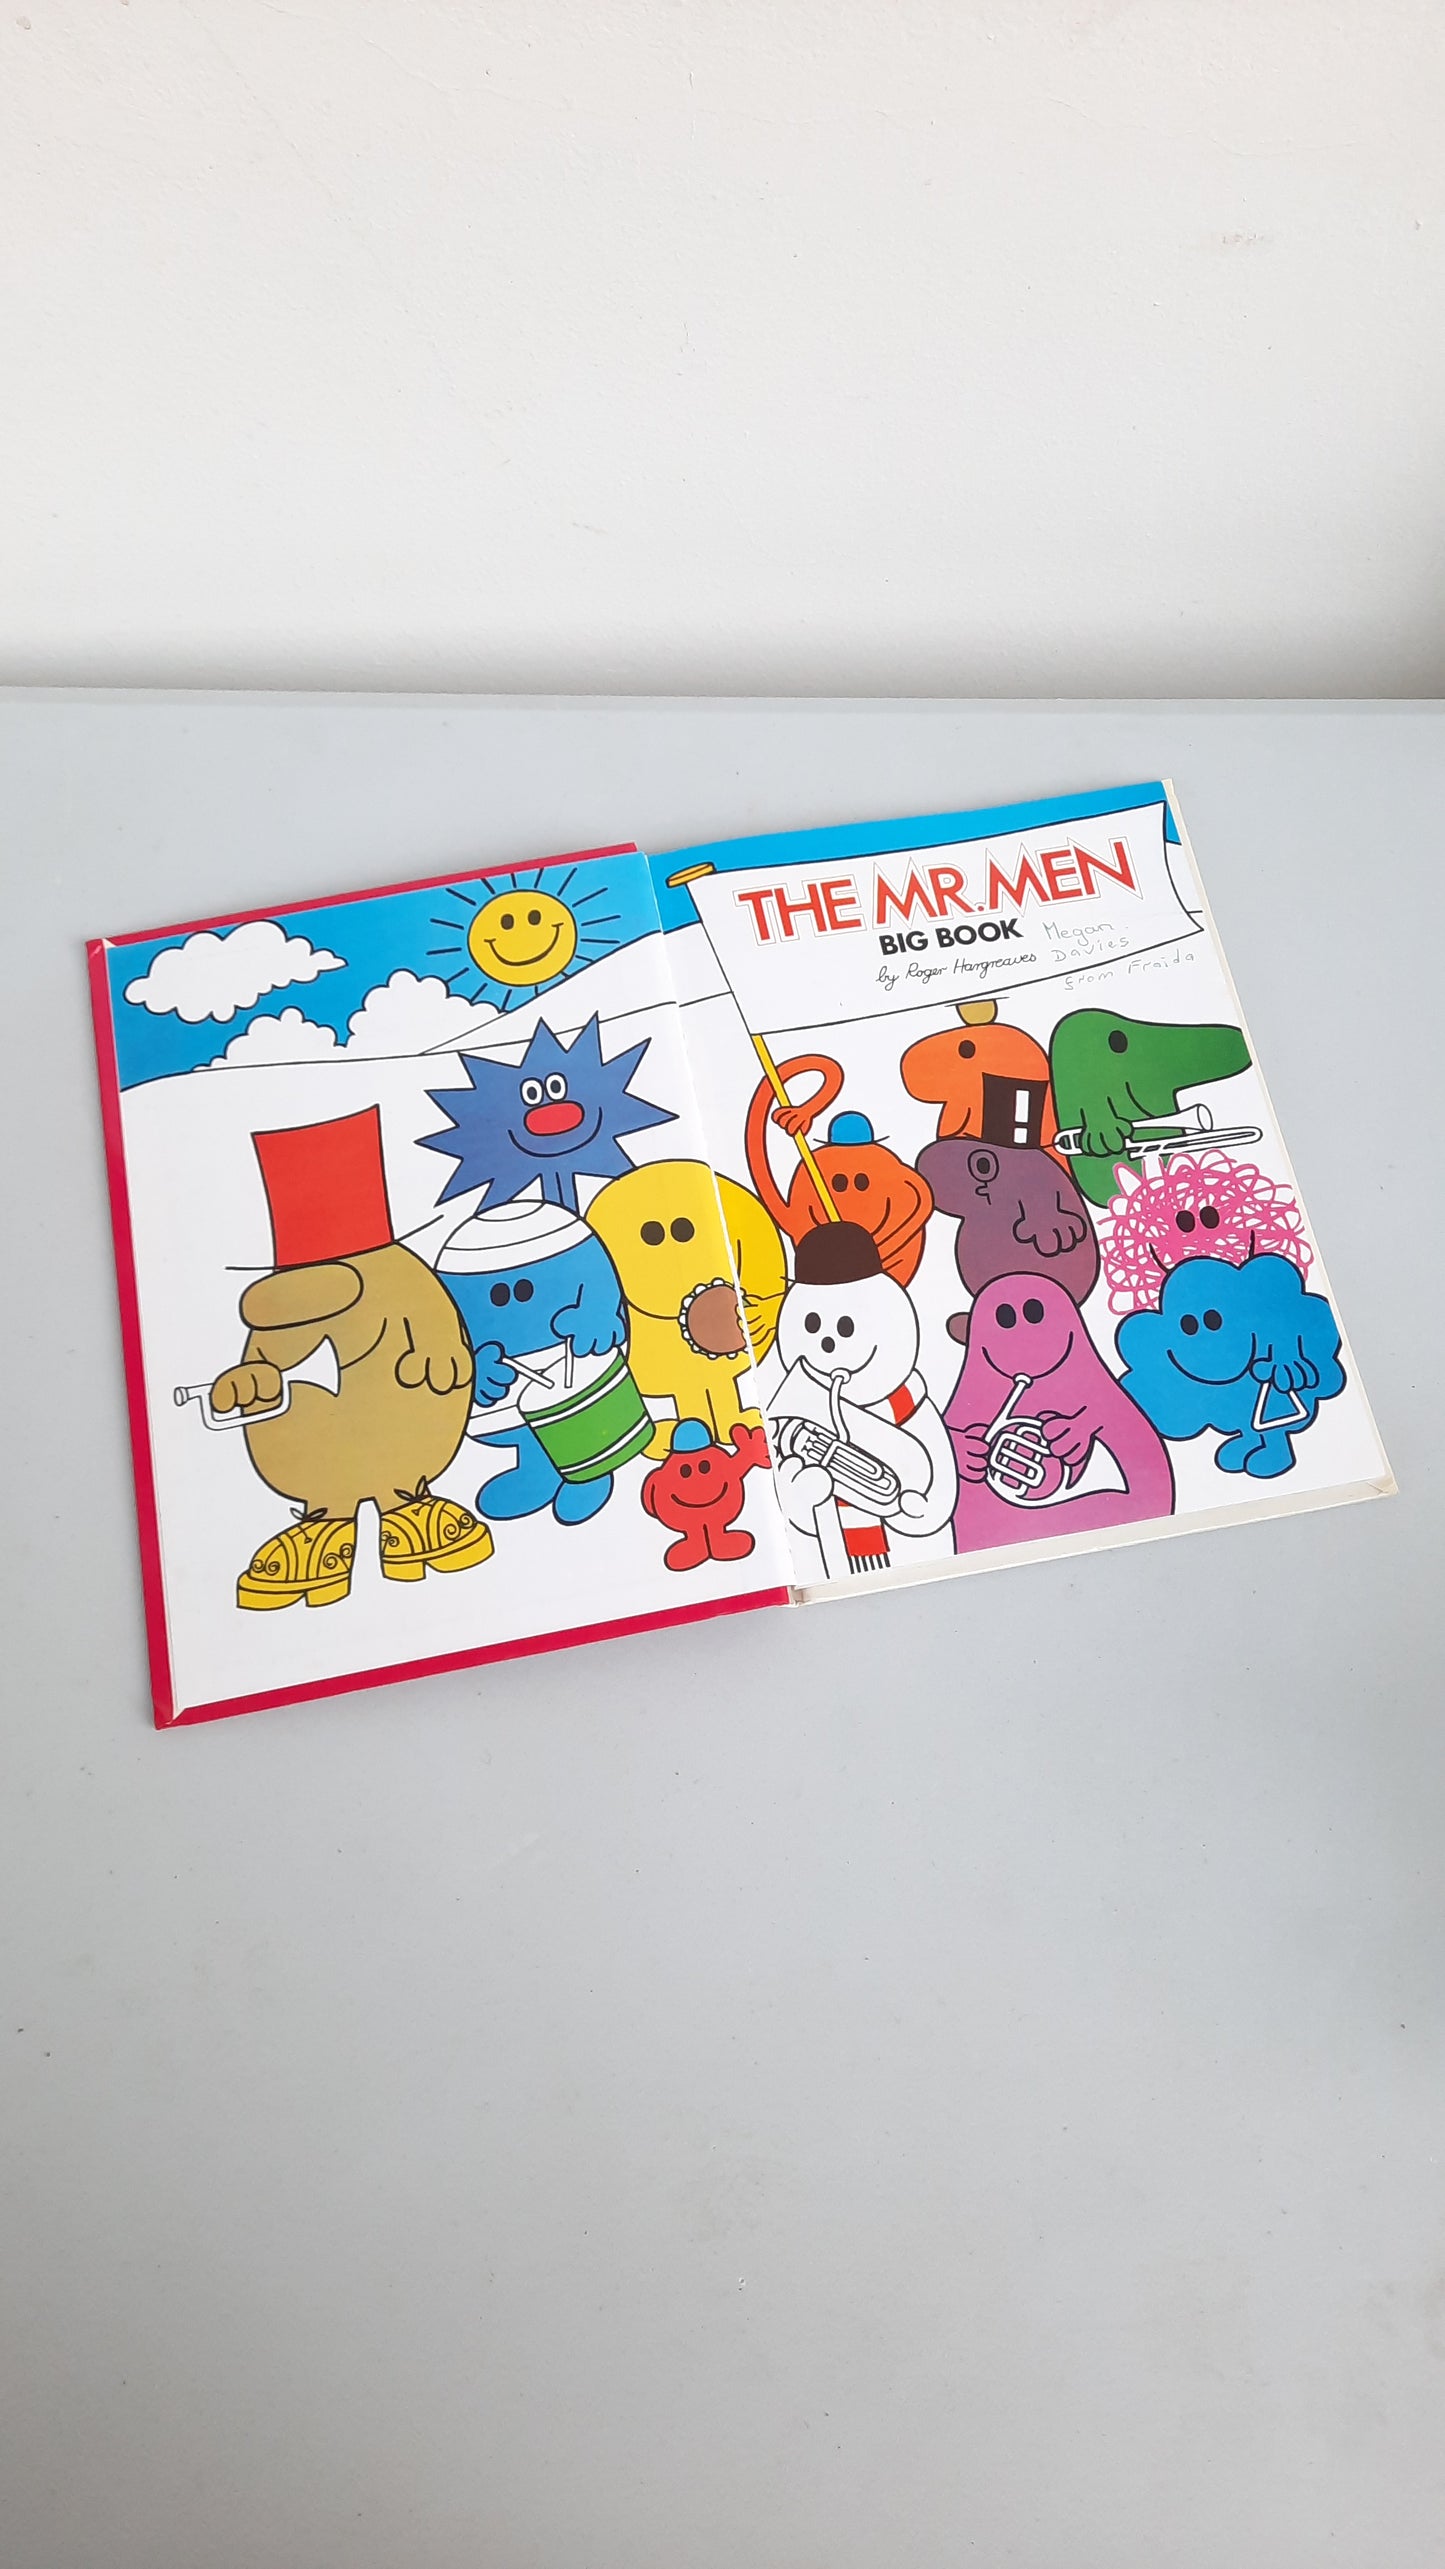 Vintage "The Mr. Men Big Book" 1979 by Roger Hargreaves